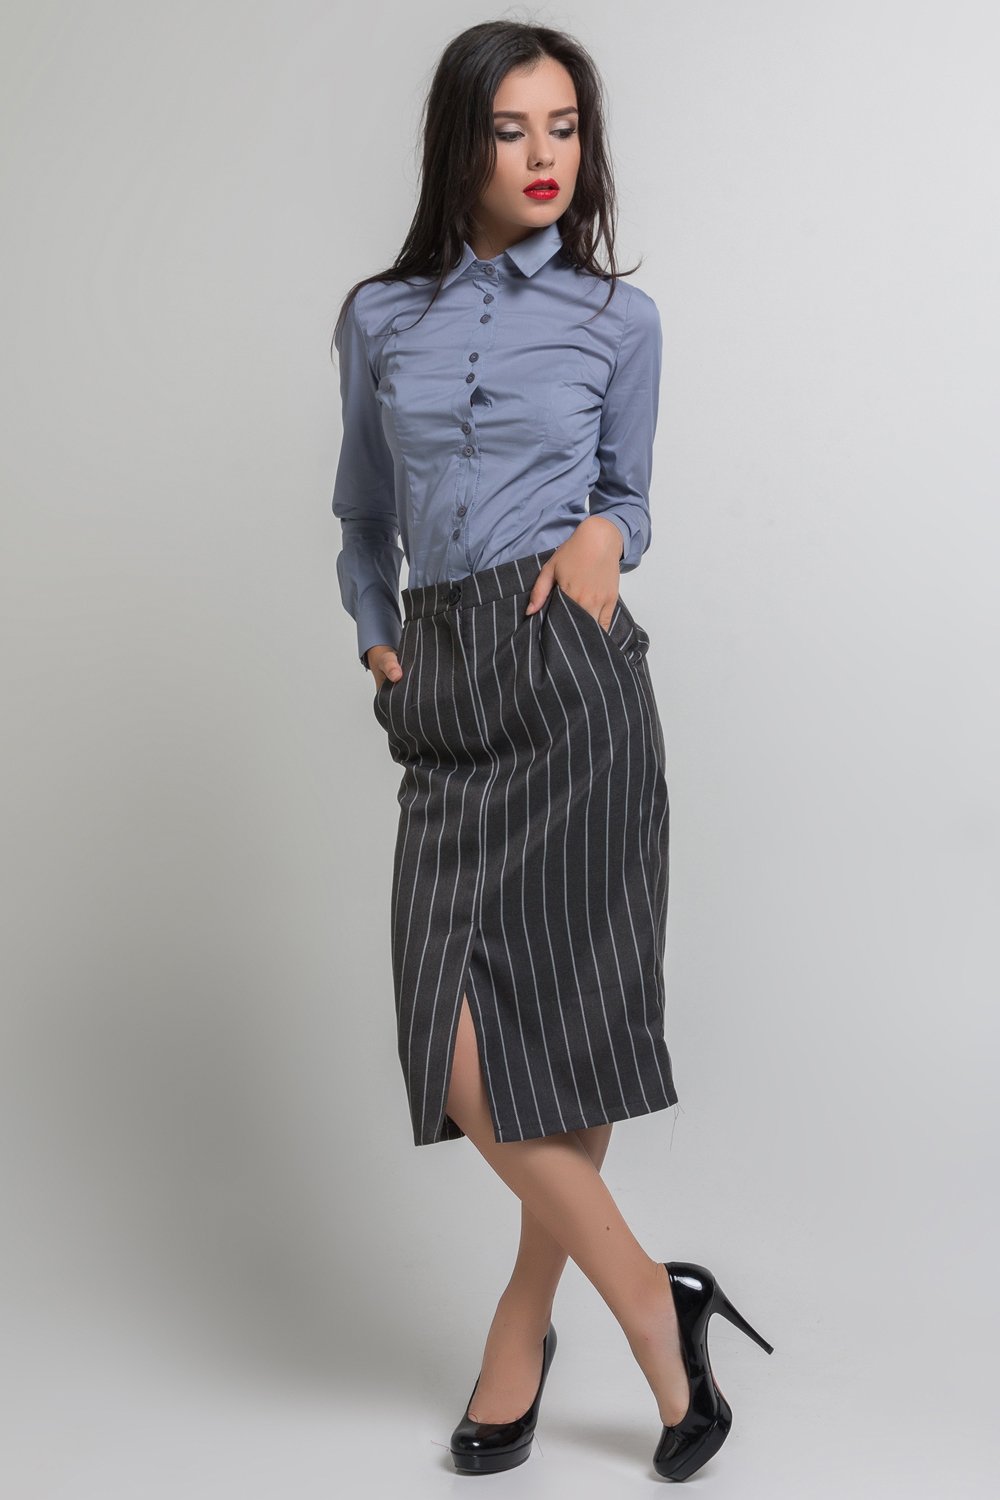 Gray striped midi length skirt.